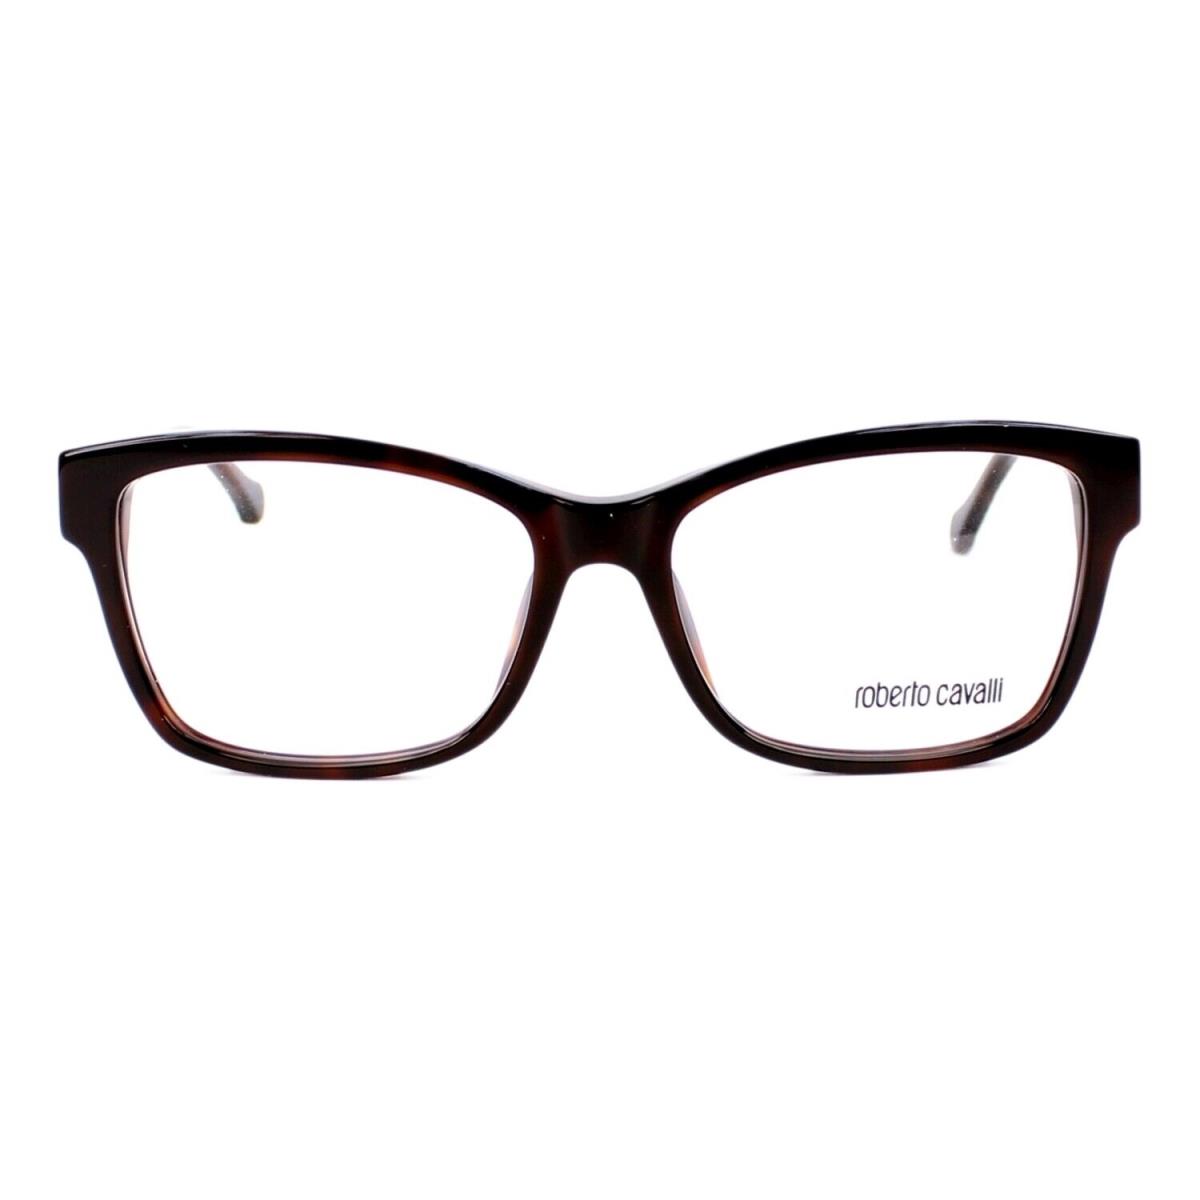 Roberto Cavalli Alimatha RC 755 Brown 052 Eyeglasses Frame 54-16-140 Cat Eye